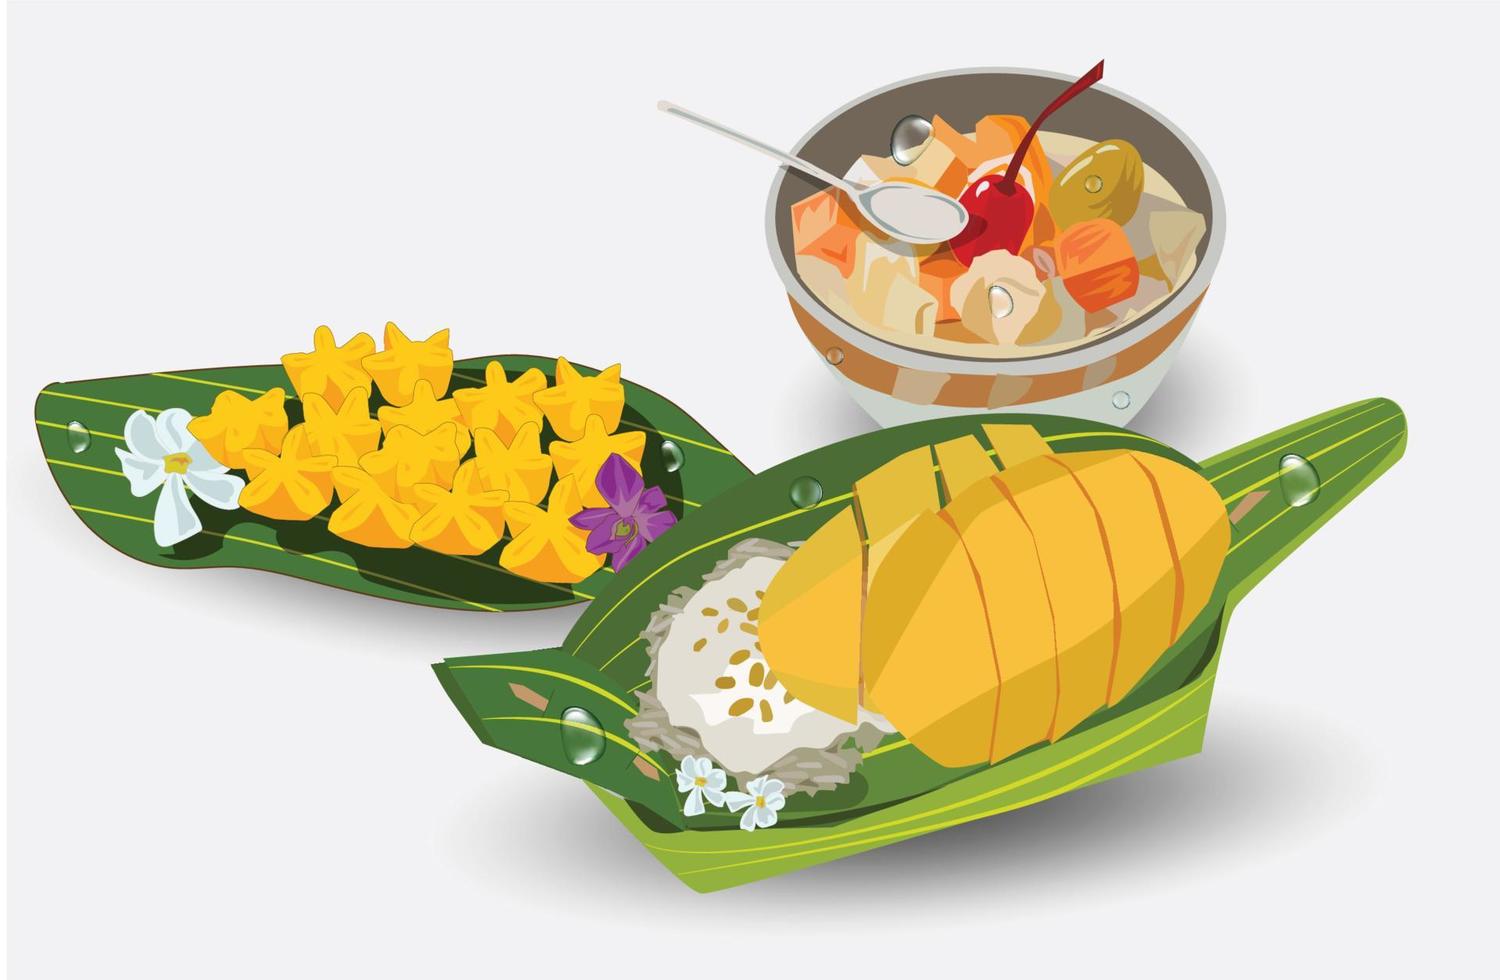 Thai dessert vector illustration Mango sticky rice placed on a banana leaf on